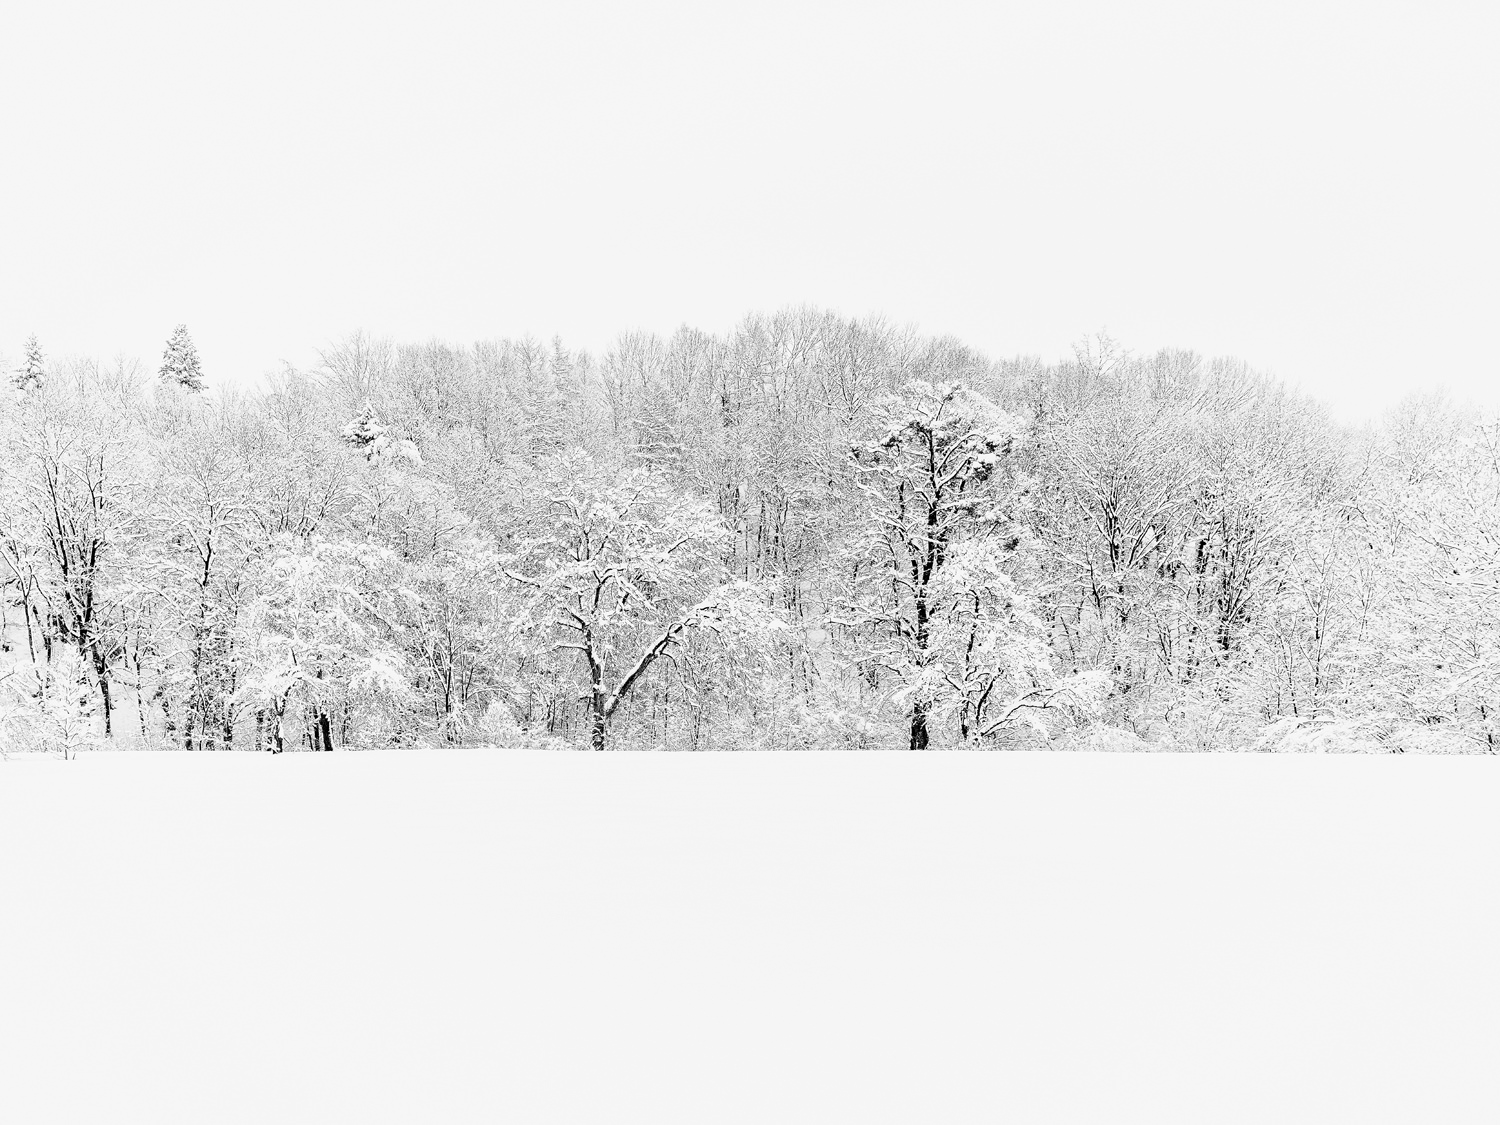 Regionales 3052 Innermanzing, Winter Wonderland IV, © Nicolas Hochenegg